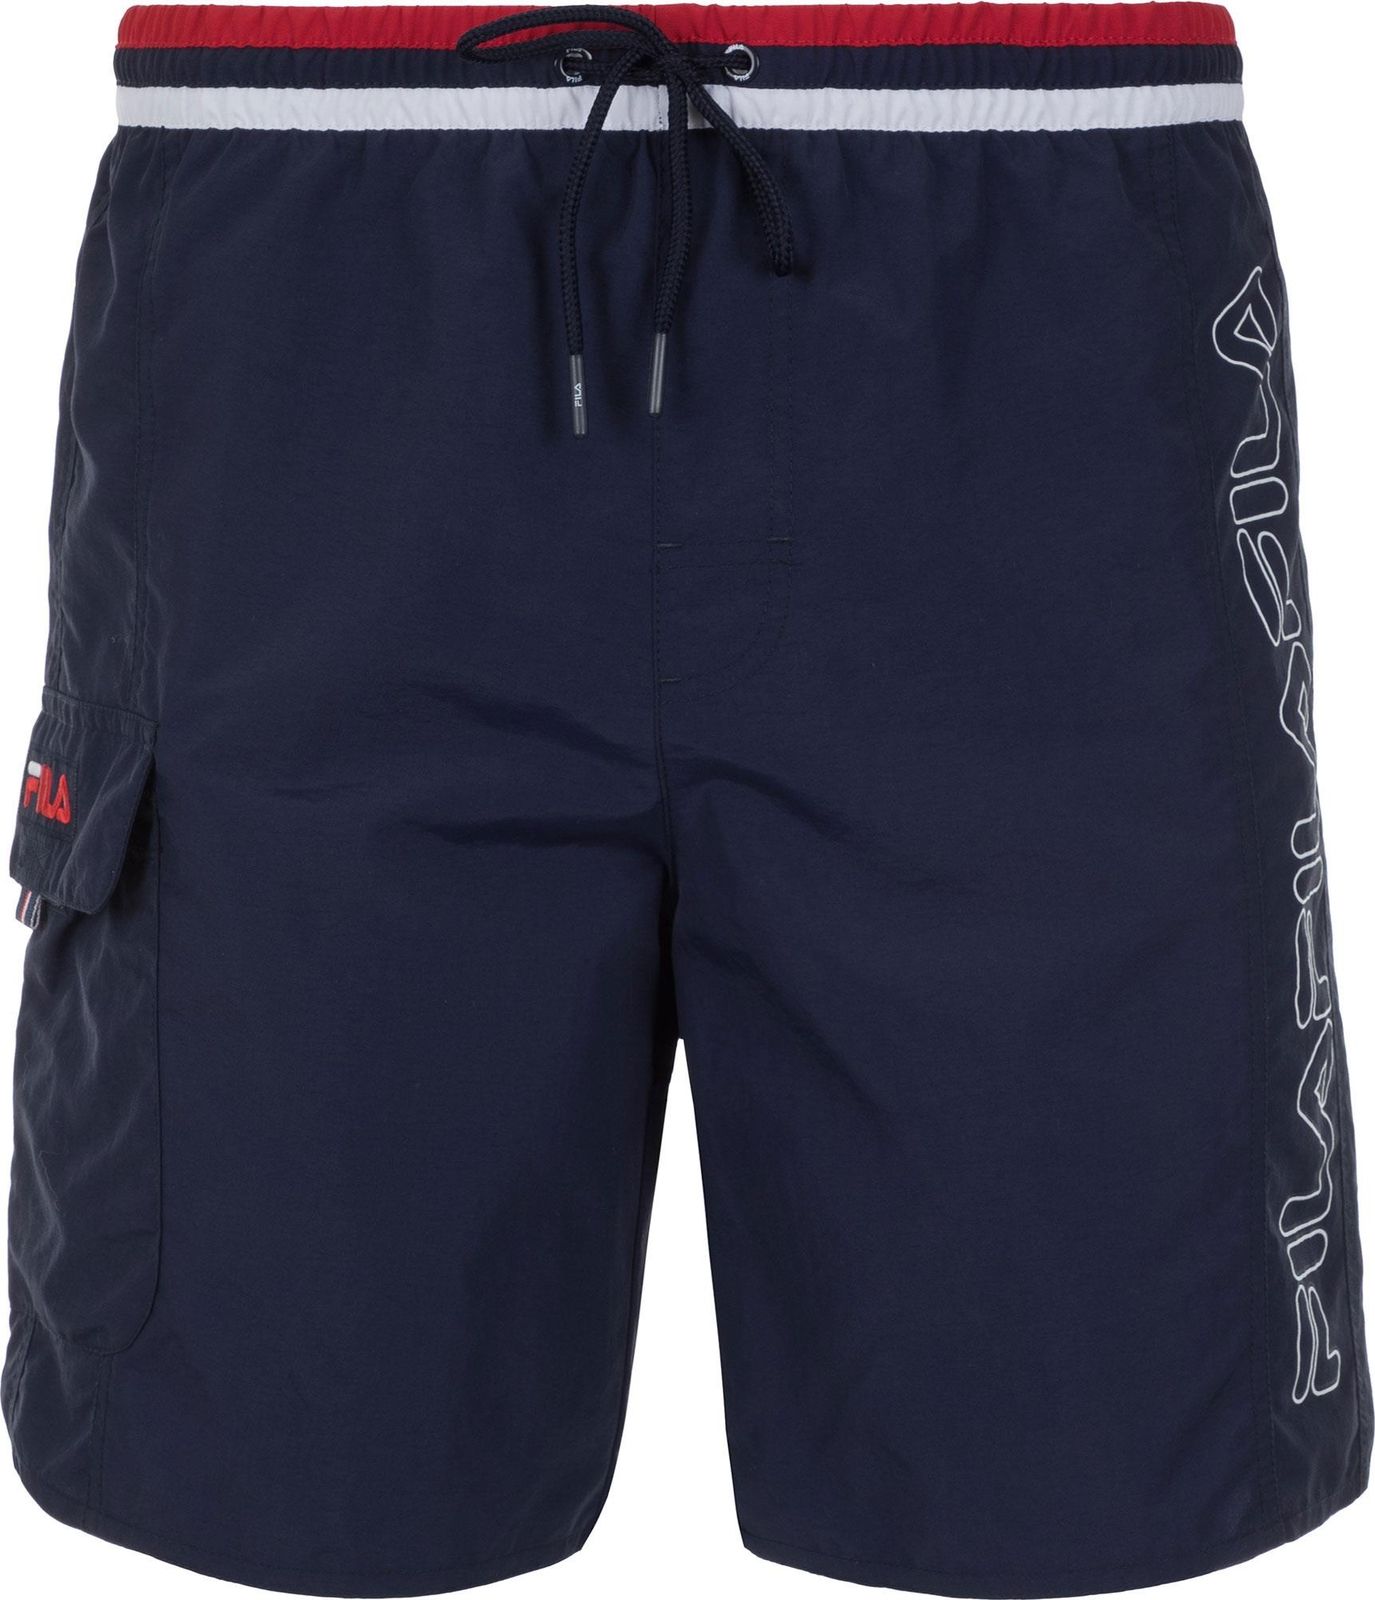   Fila Men's Shorts, : -. S19AFLSHM03-Z4.  M (48)